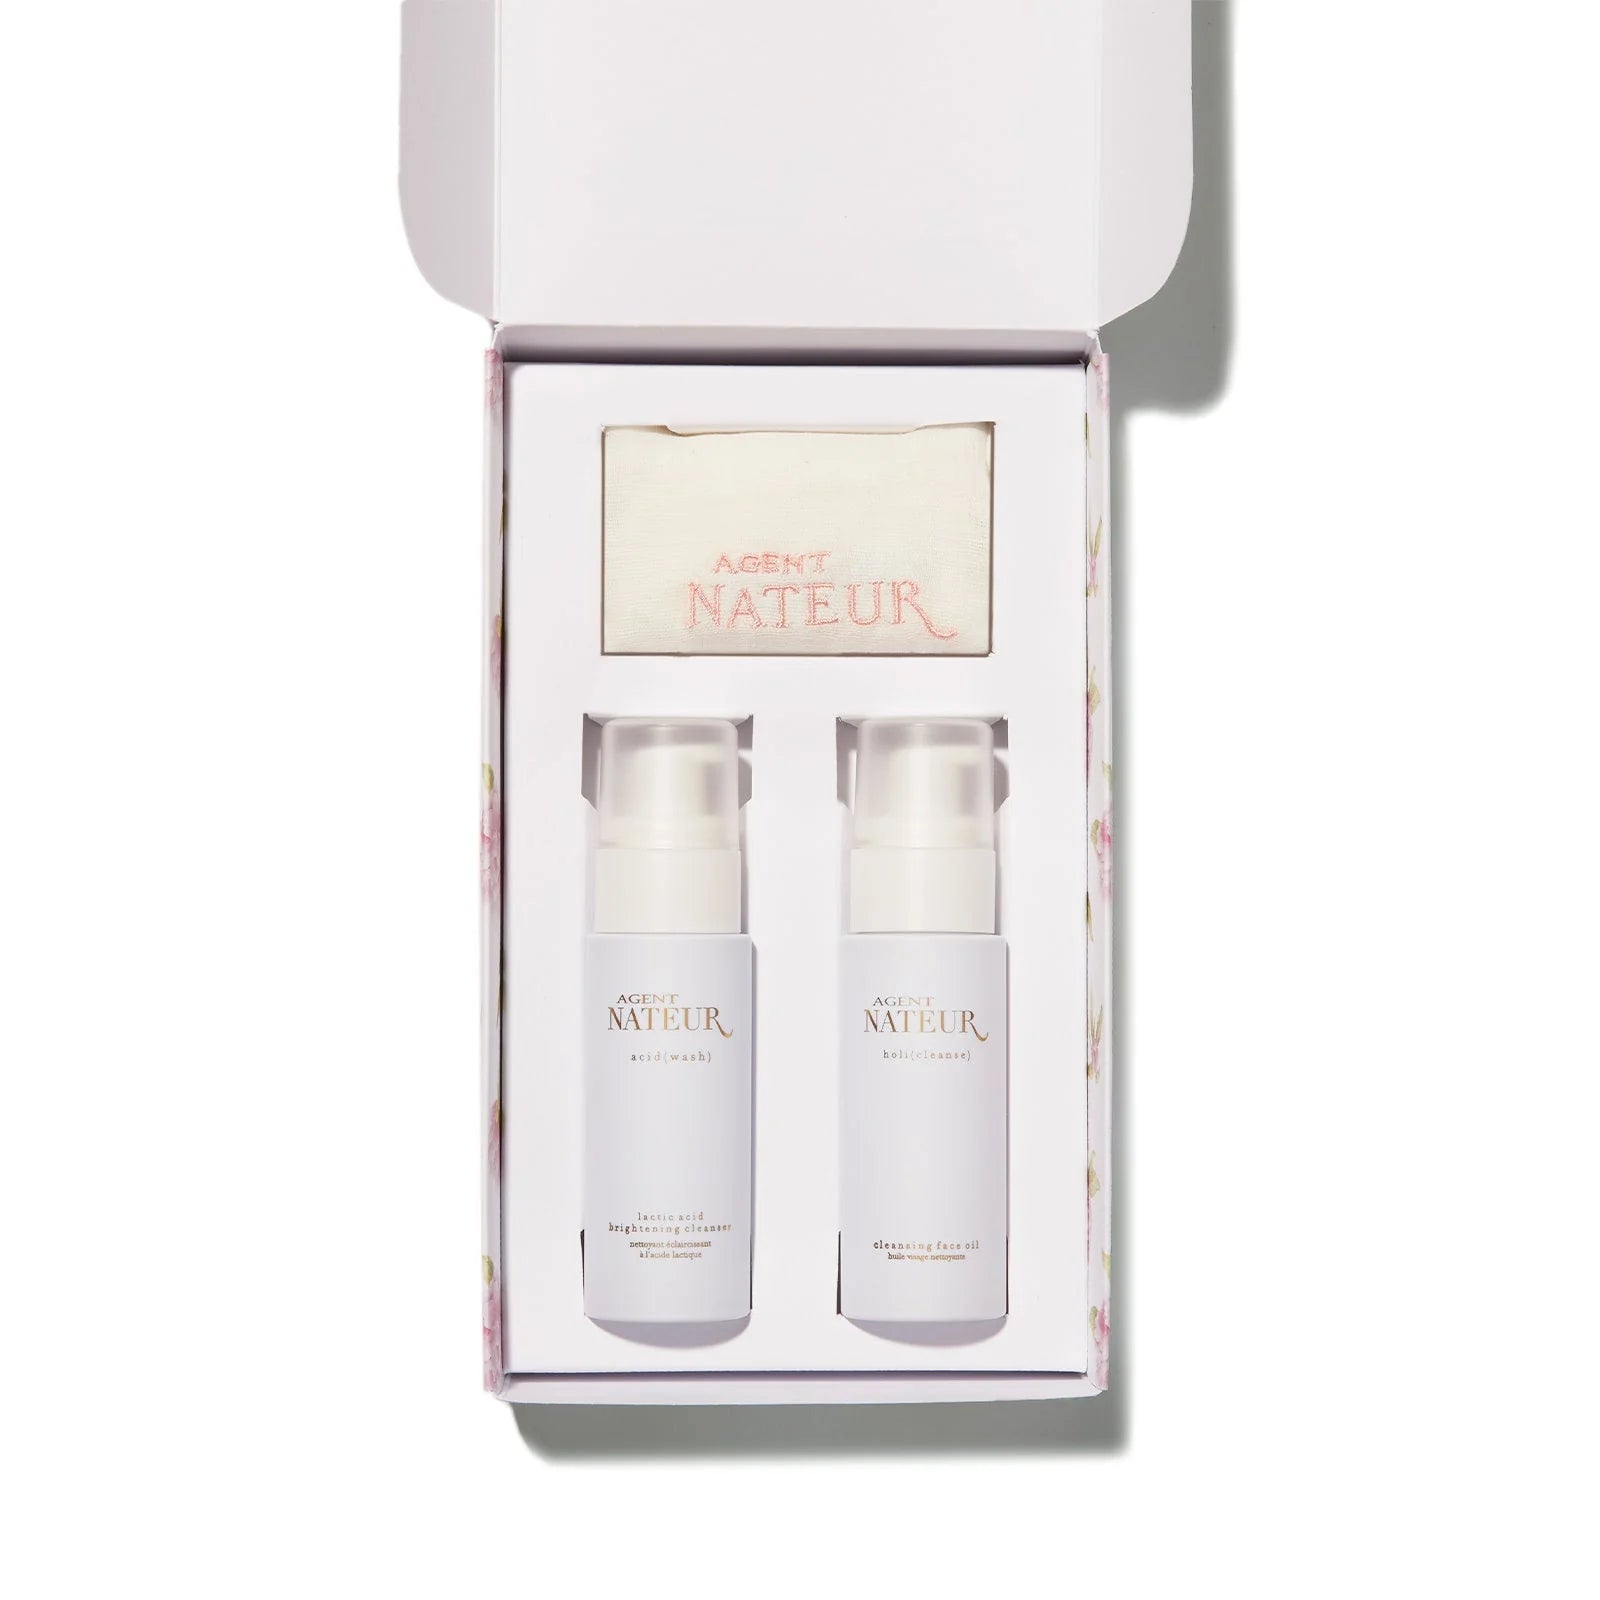 Agent Nateur | Lactic Acid Cleanser Duo Travel Size Gift Box Set